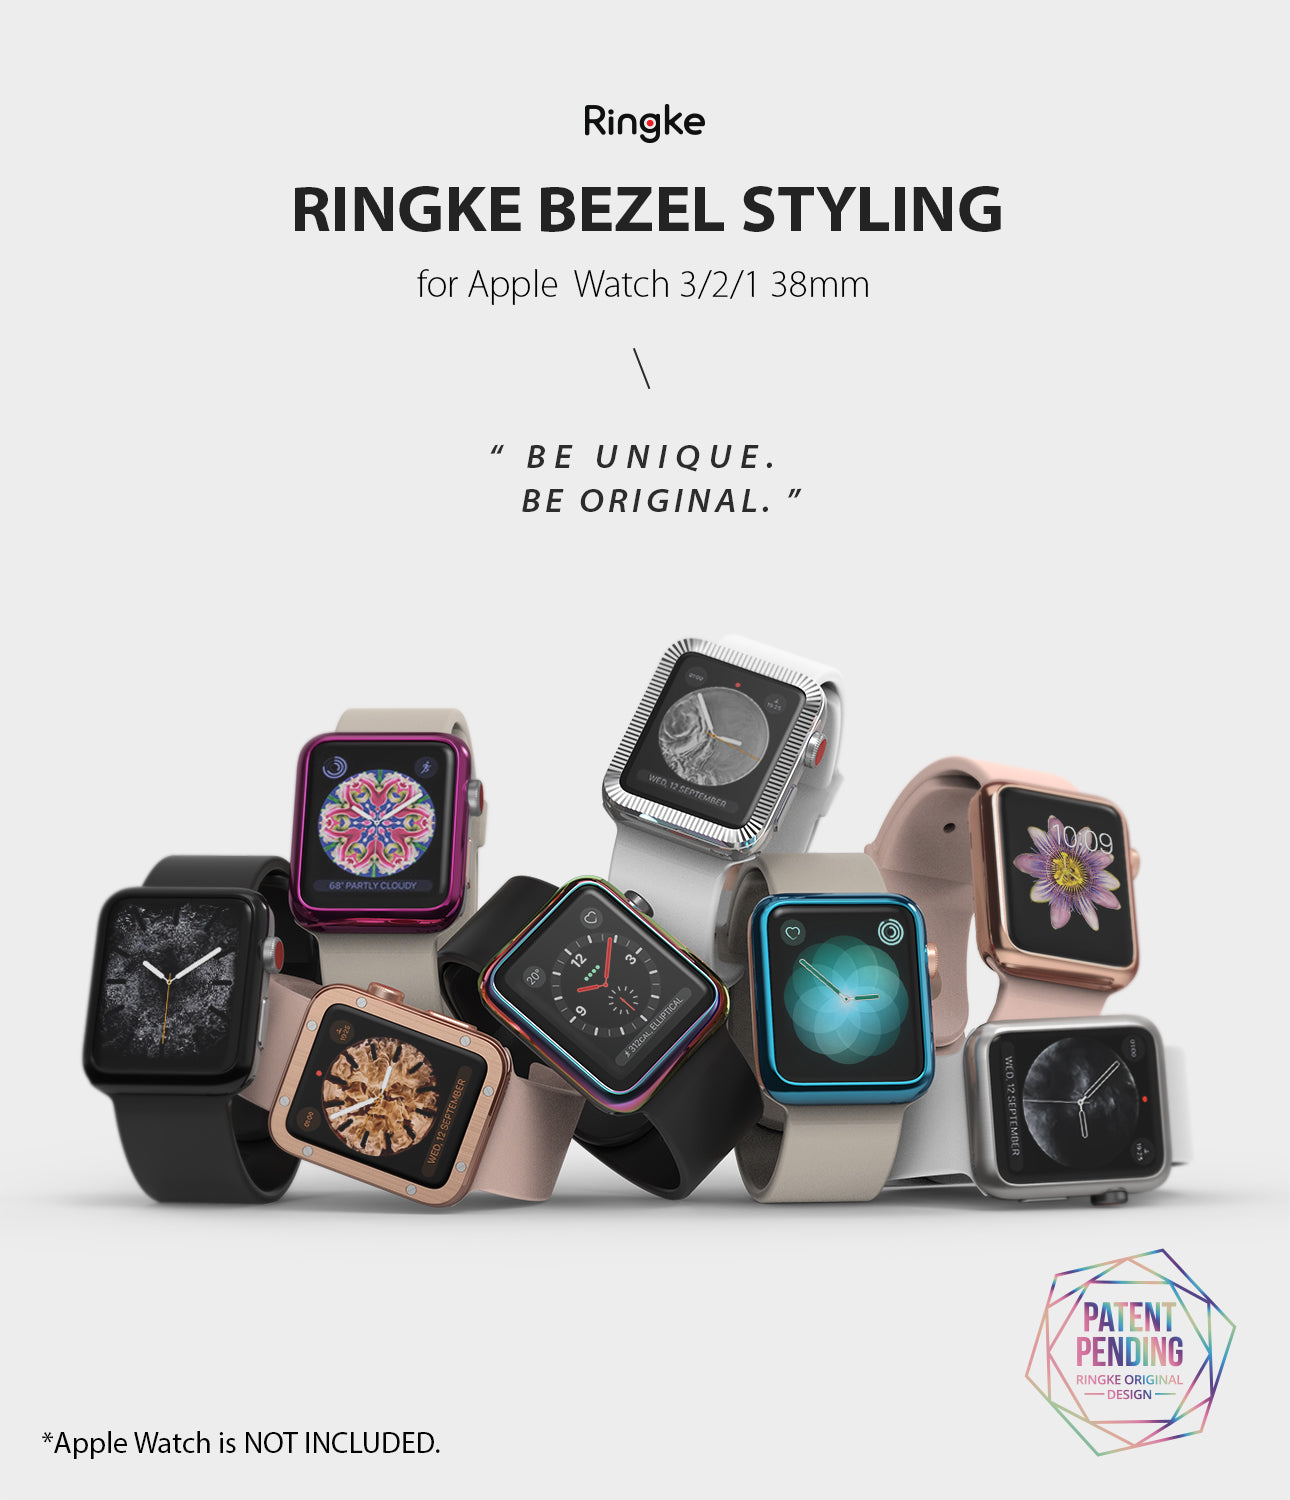 apple watch 3 2 1 38mm case ringke bezel styling stainless steel frame cover 38-06